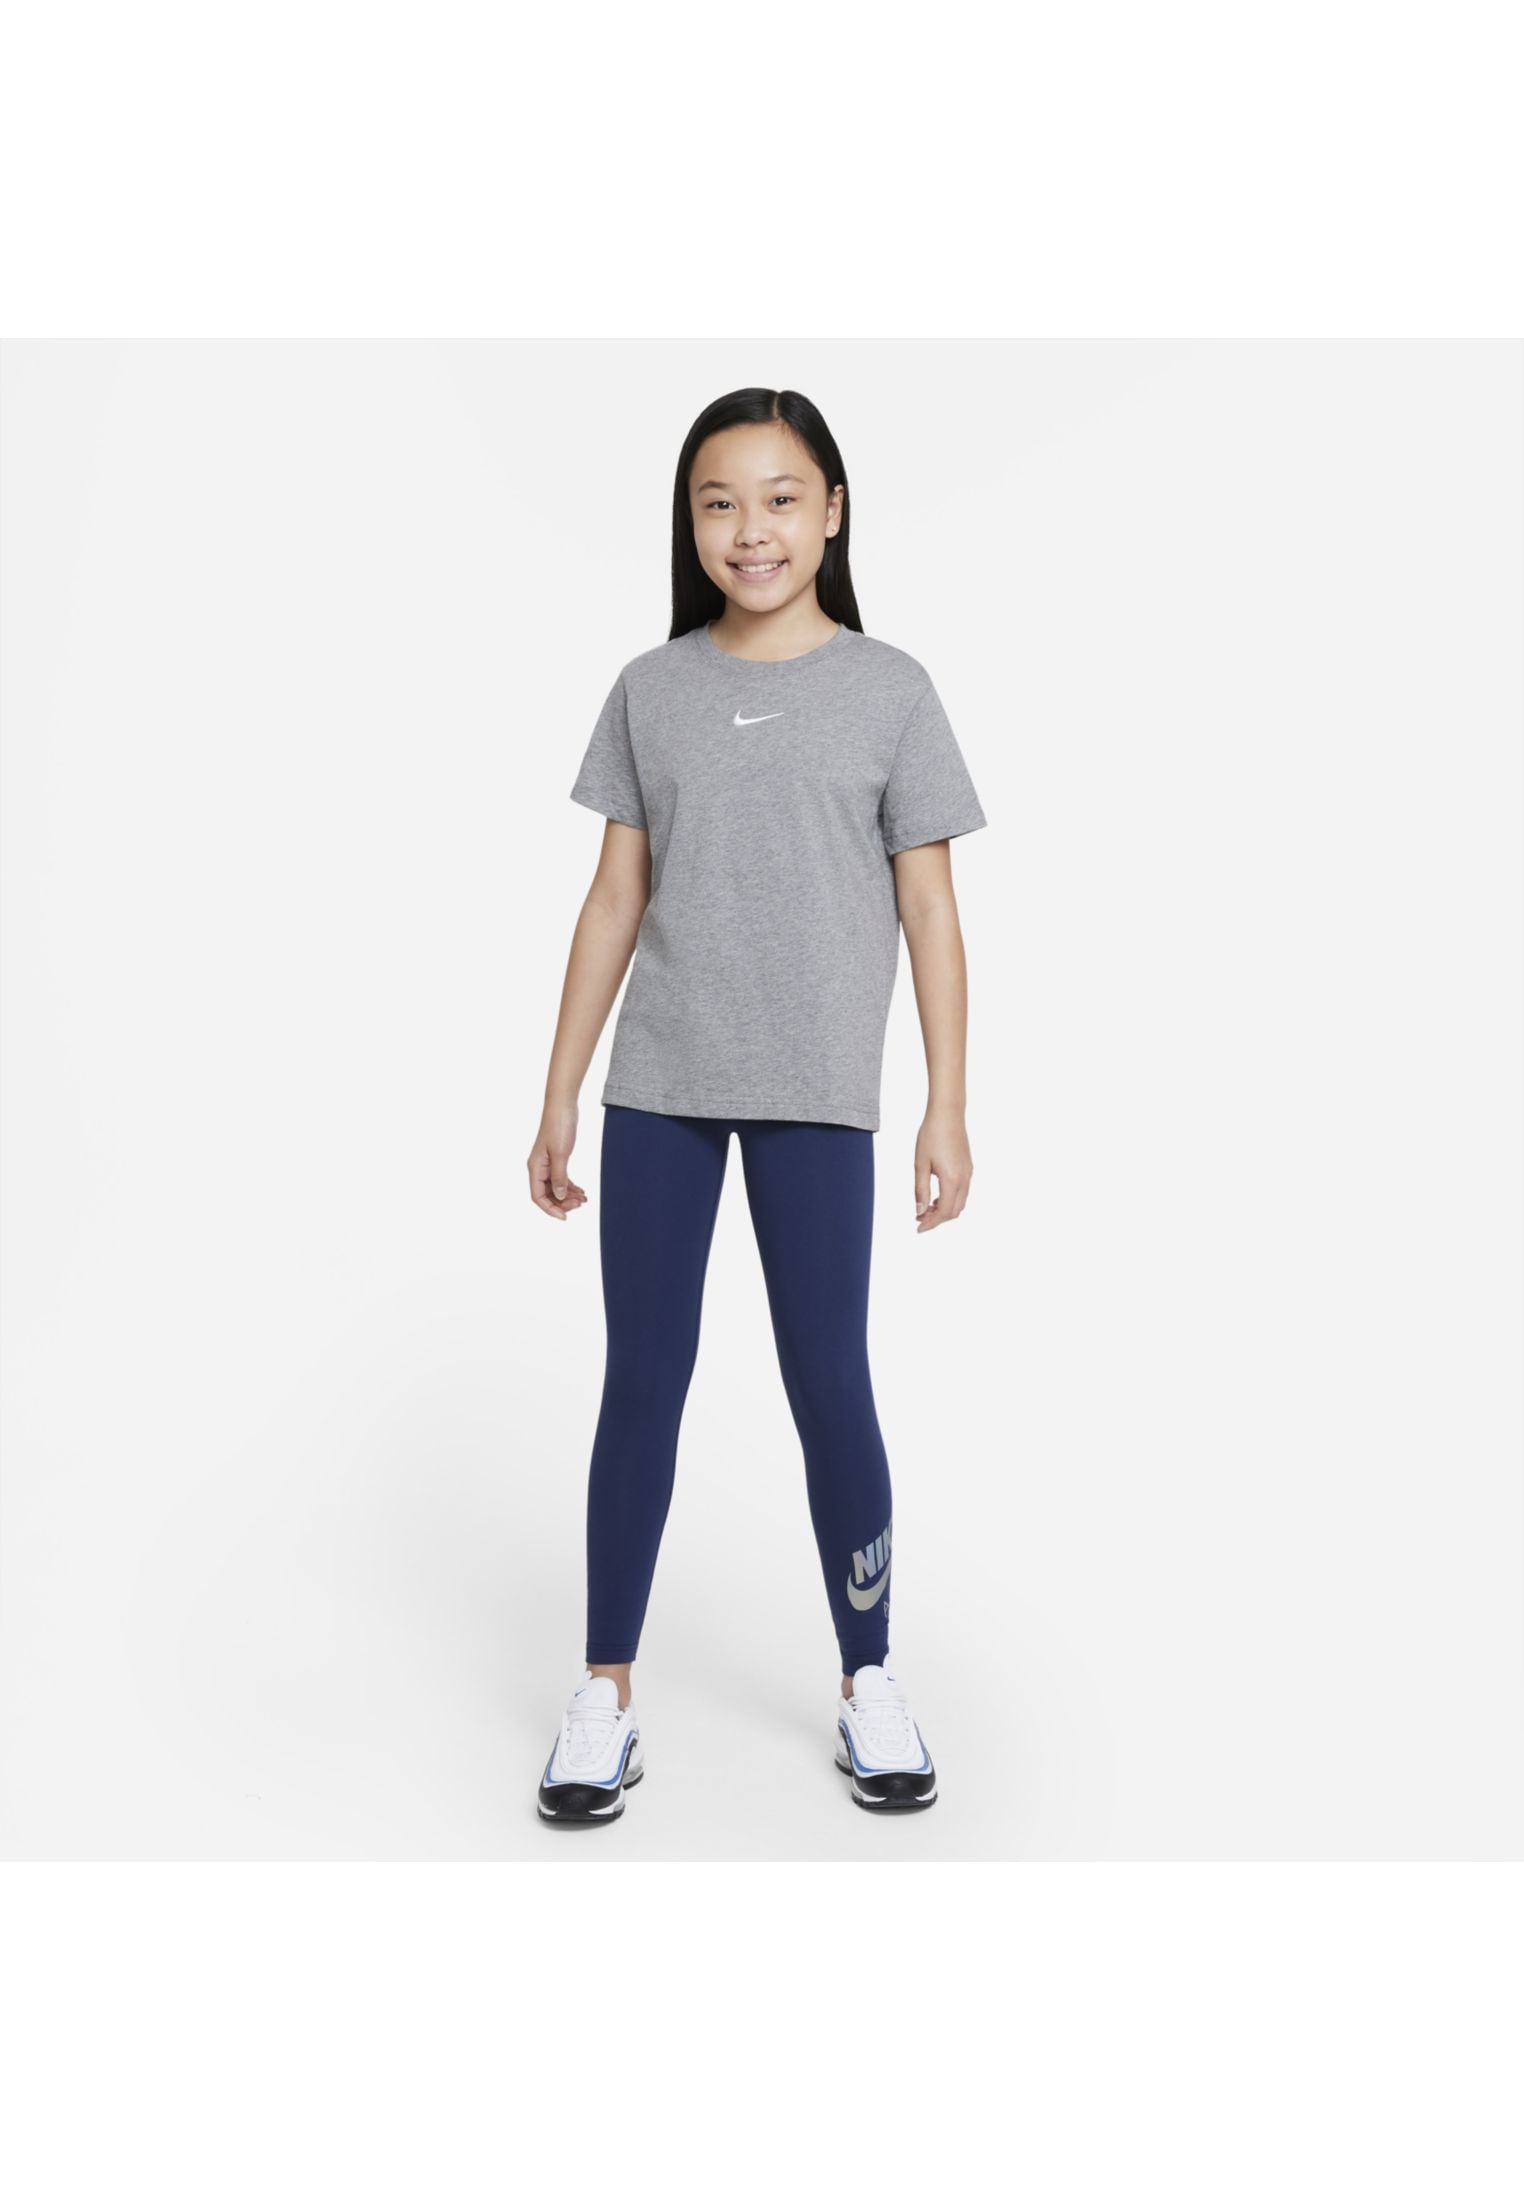 Nike Air Kids Leggings - Midnight Navy - Girls Clothing